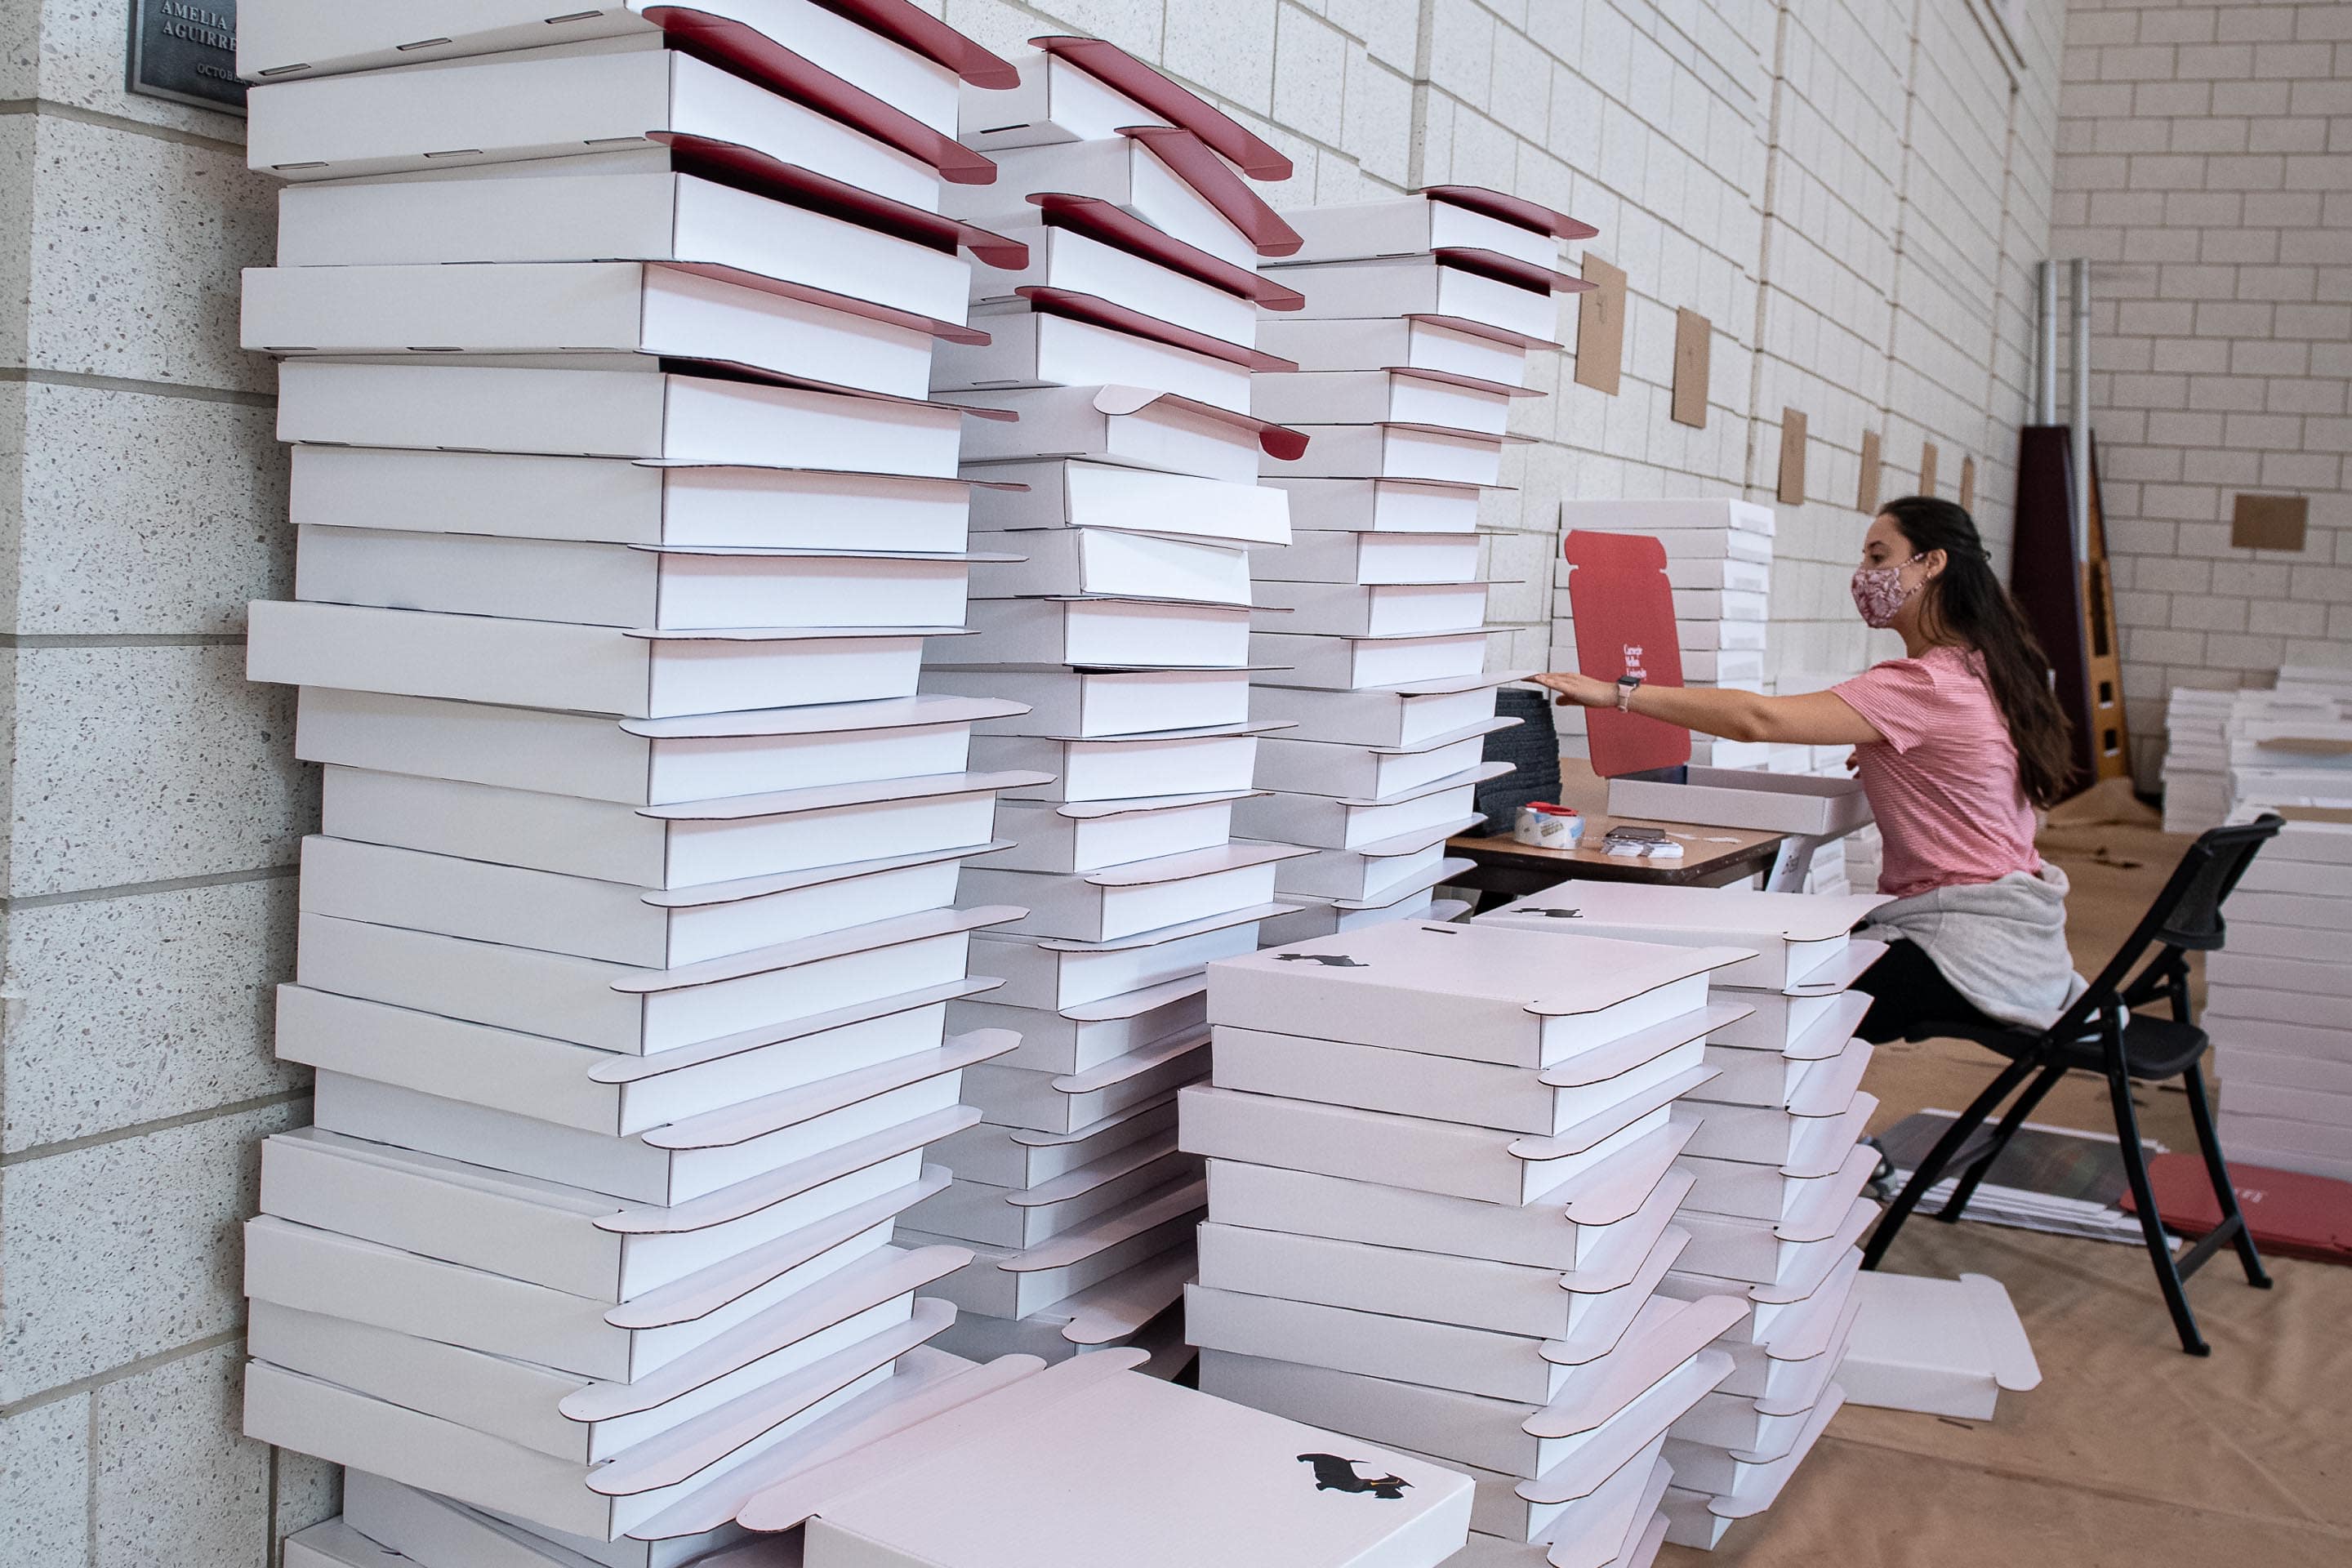 Image of girl assembling diploma box next to stacks of flat white boxes